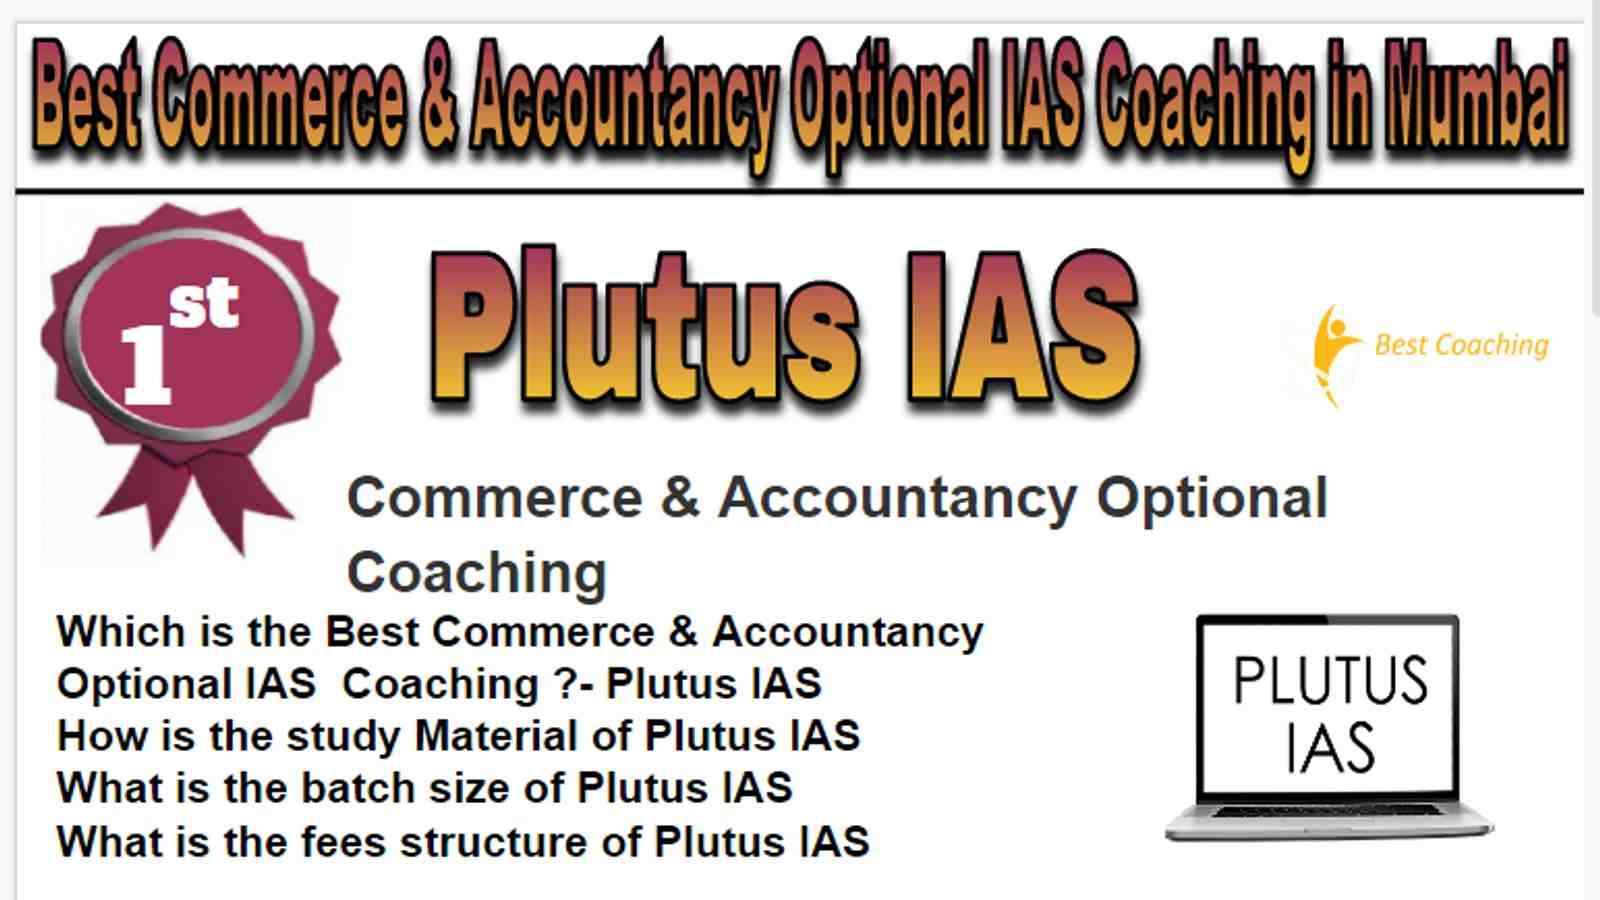 Rank 1 Best Commerce & Accountancy Optional IAS Coaching in Mumbai